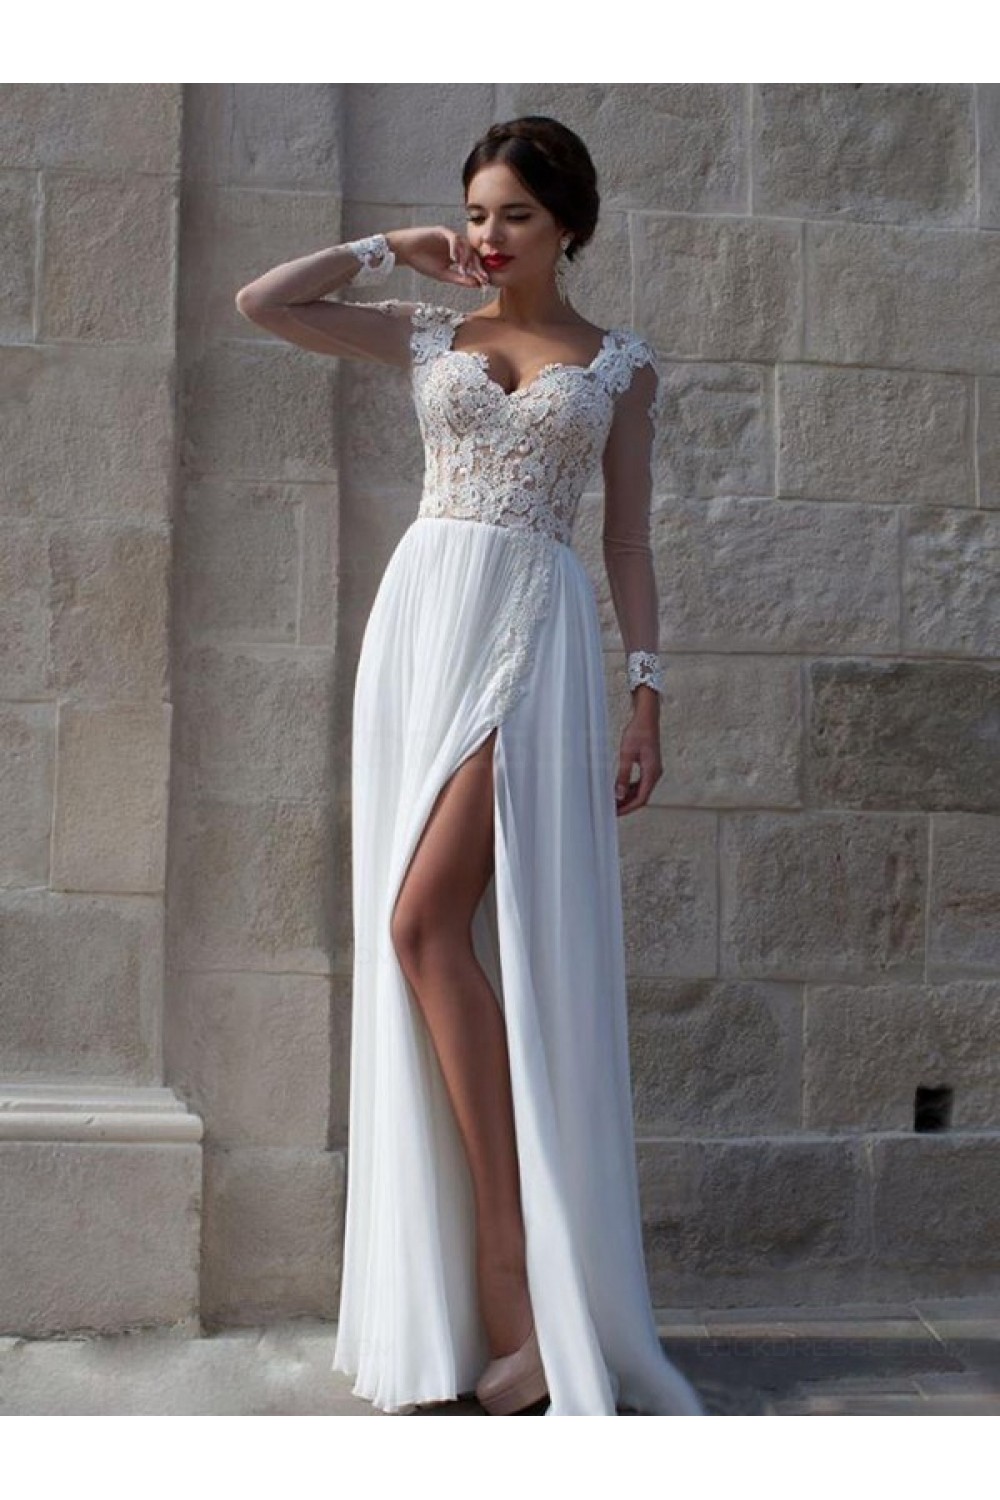 white see through prom dress